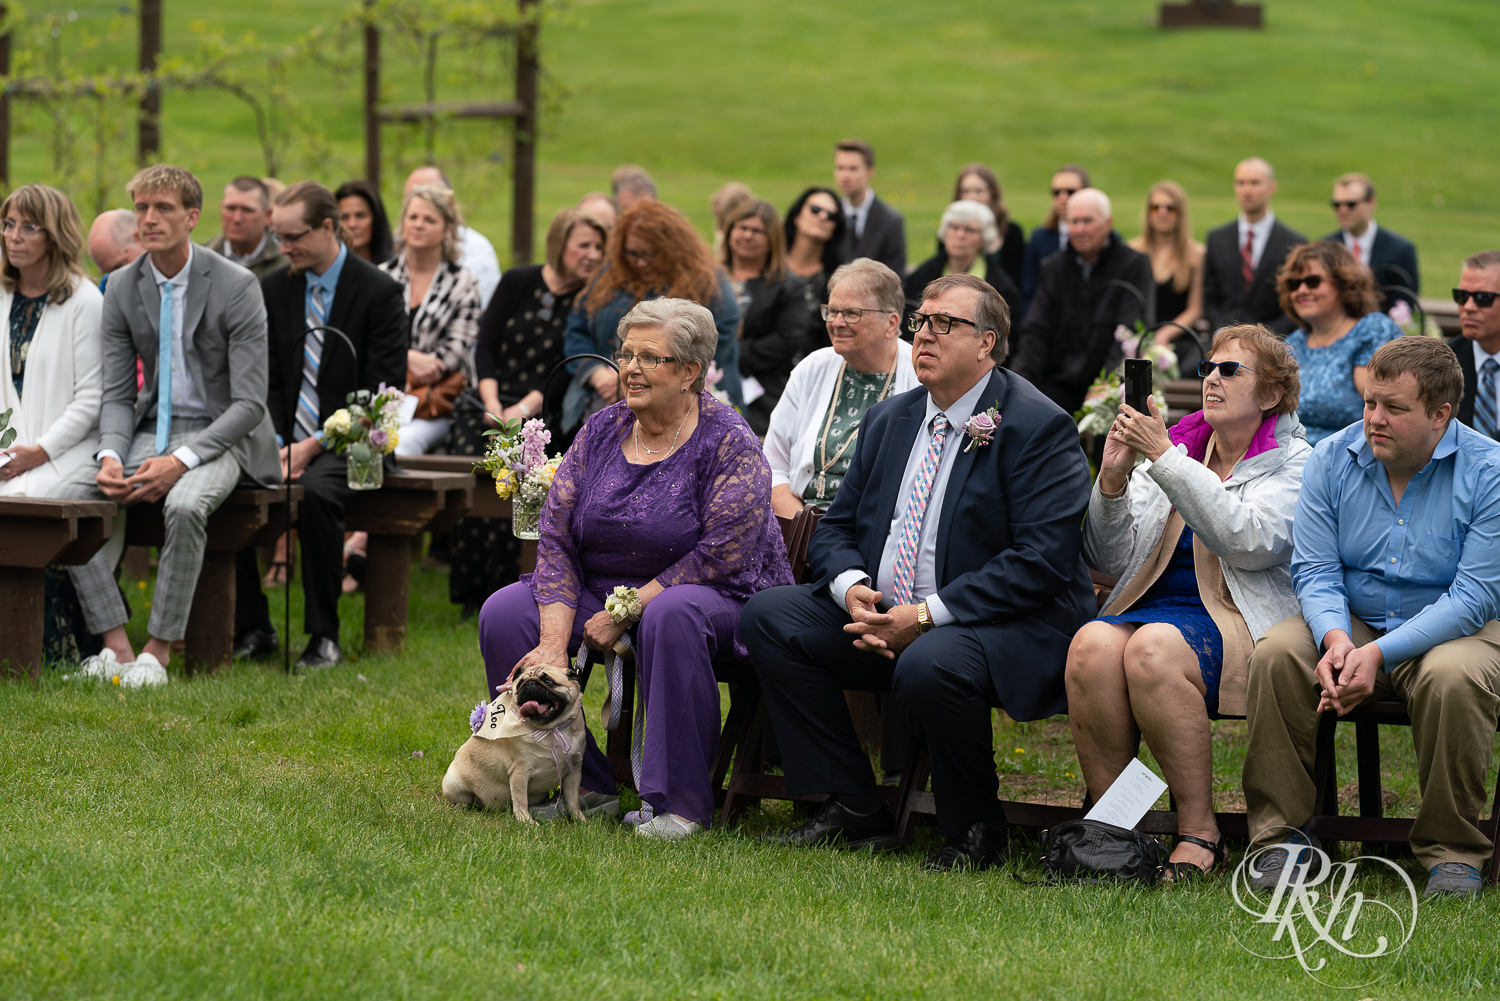 Outdoor summer wedding ceremony at Hope Glen Farm in Cottage Grove, Minnesota.